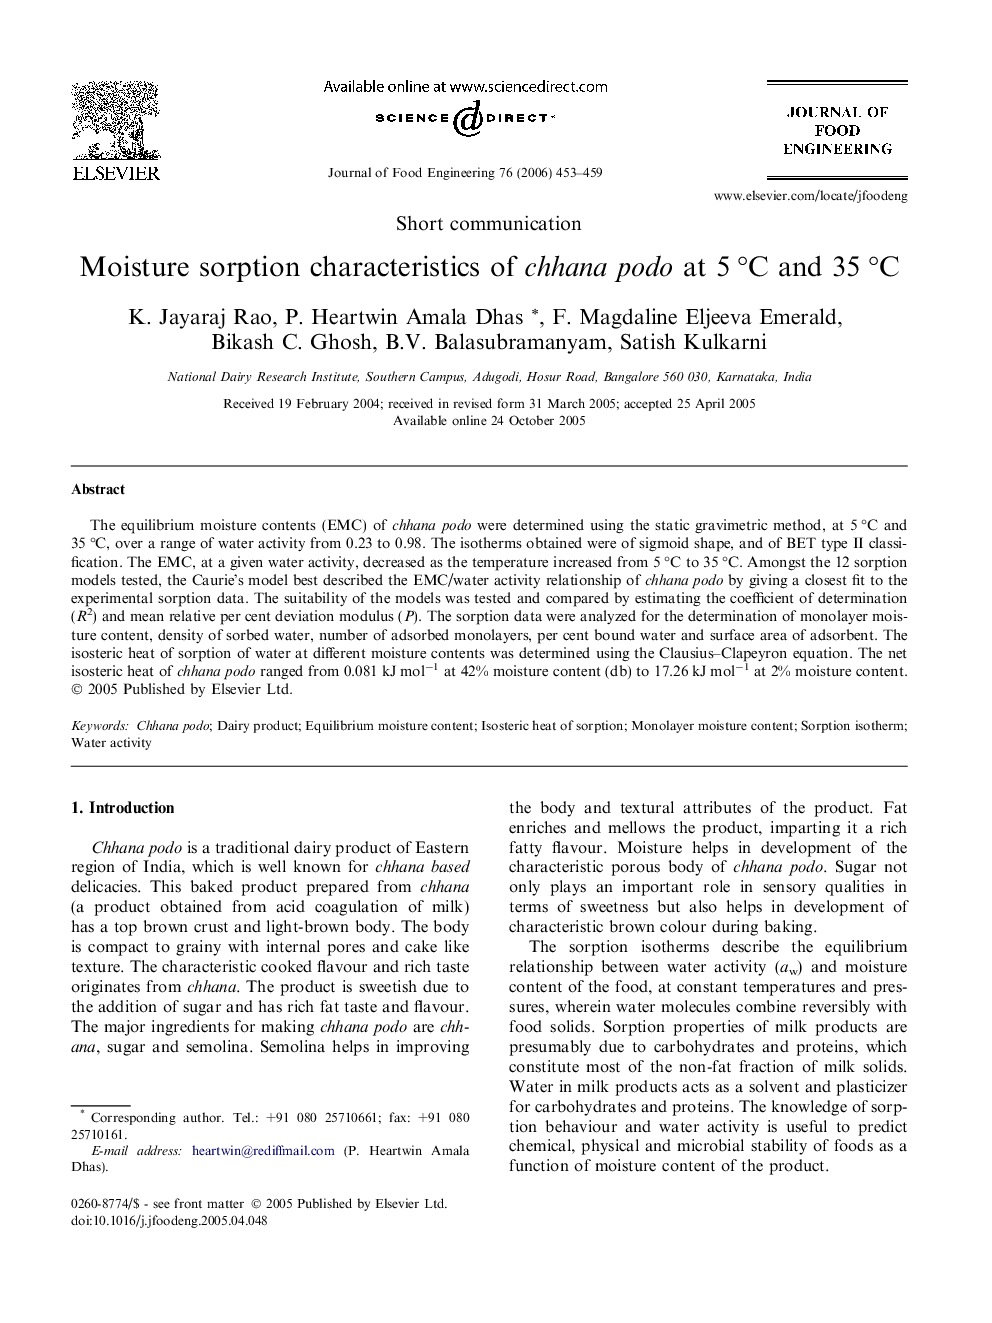 Moisture sorption characteristics of chhana podo at 5 °C and 35 °C